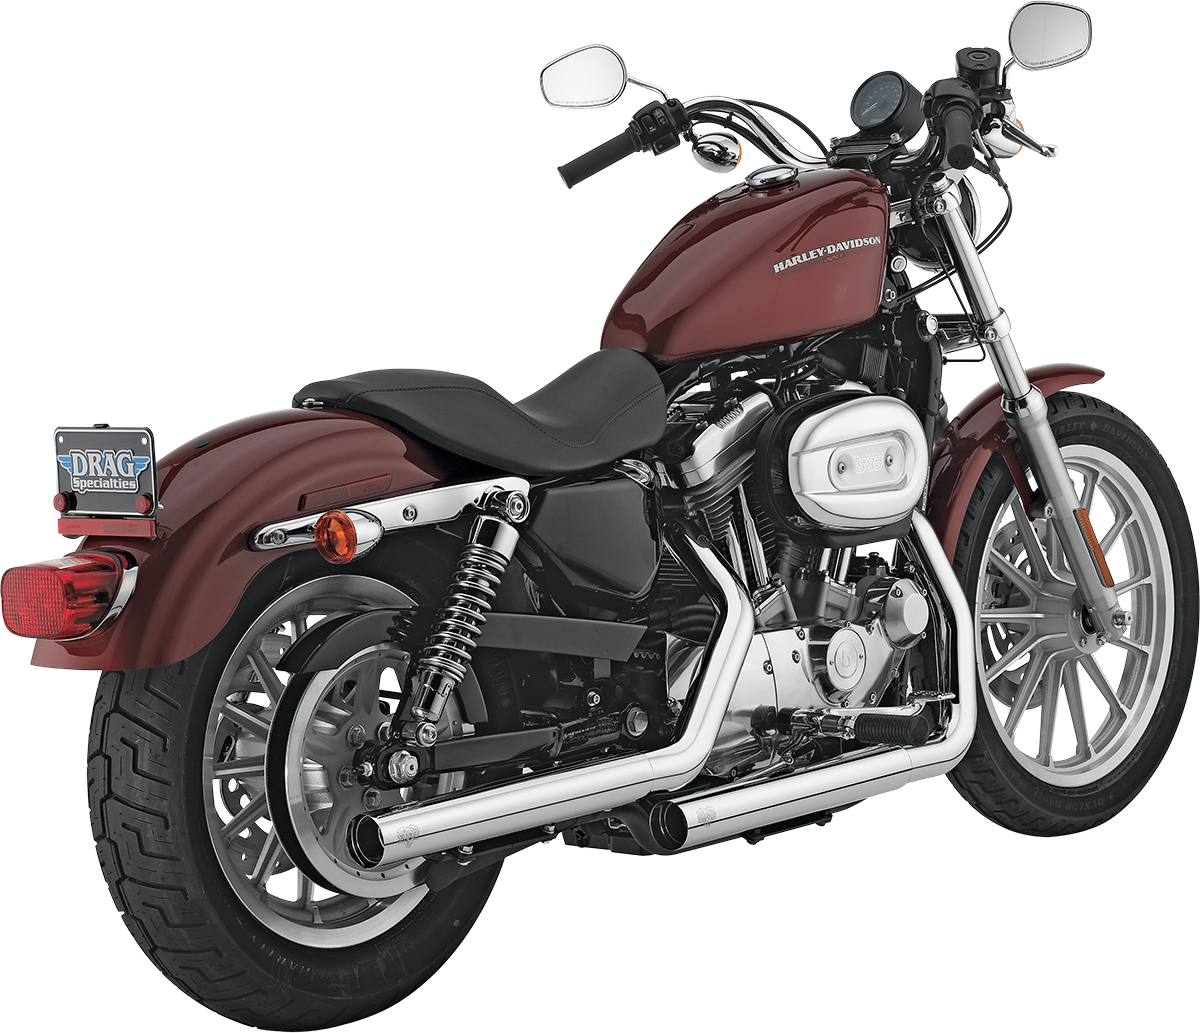 Vance & Hines Straightshots Exhaust Mufflers fits 2004-13 Harley Sportster 16819